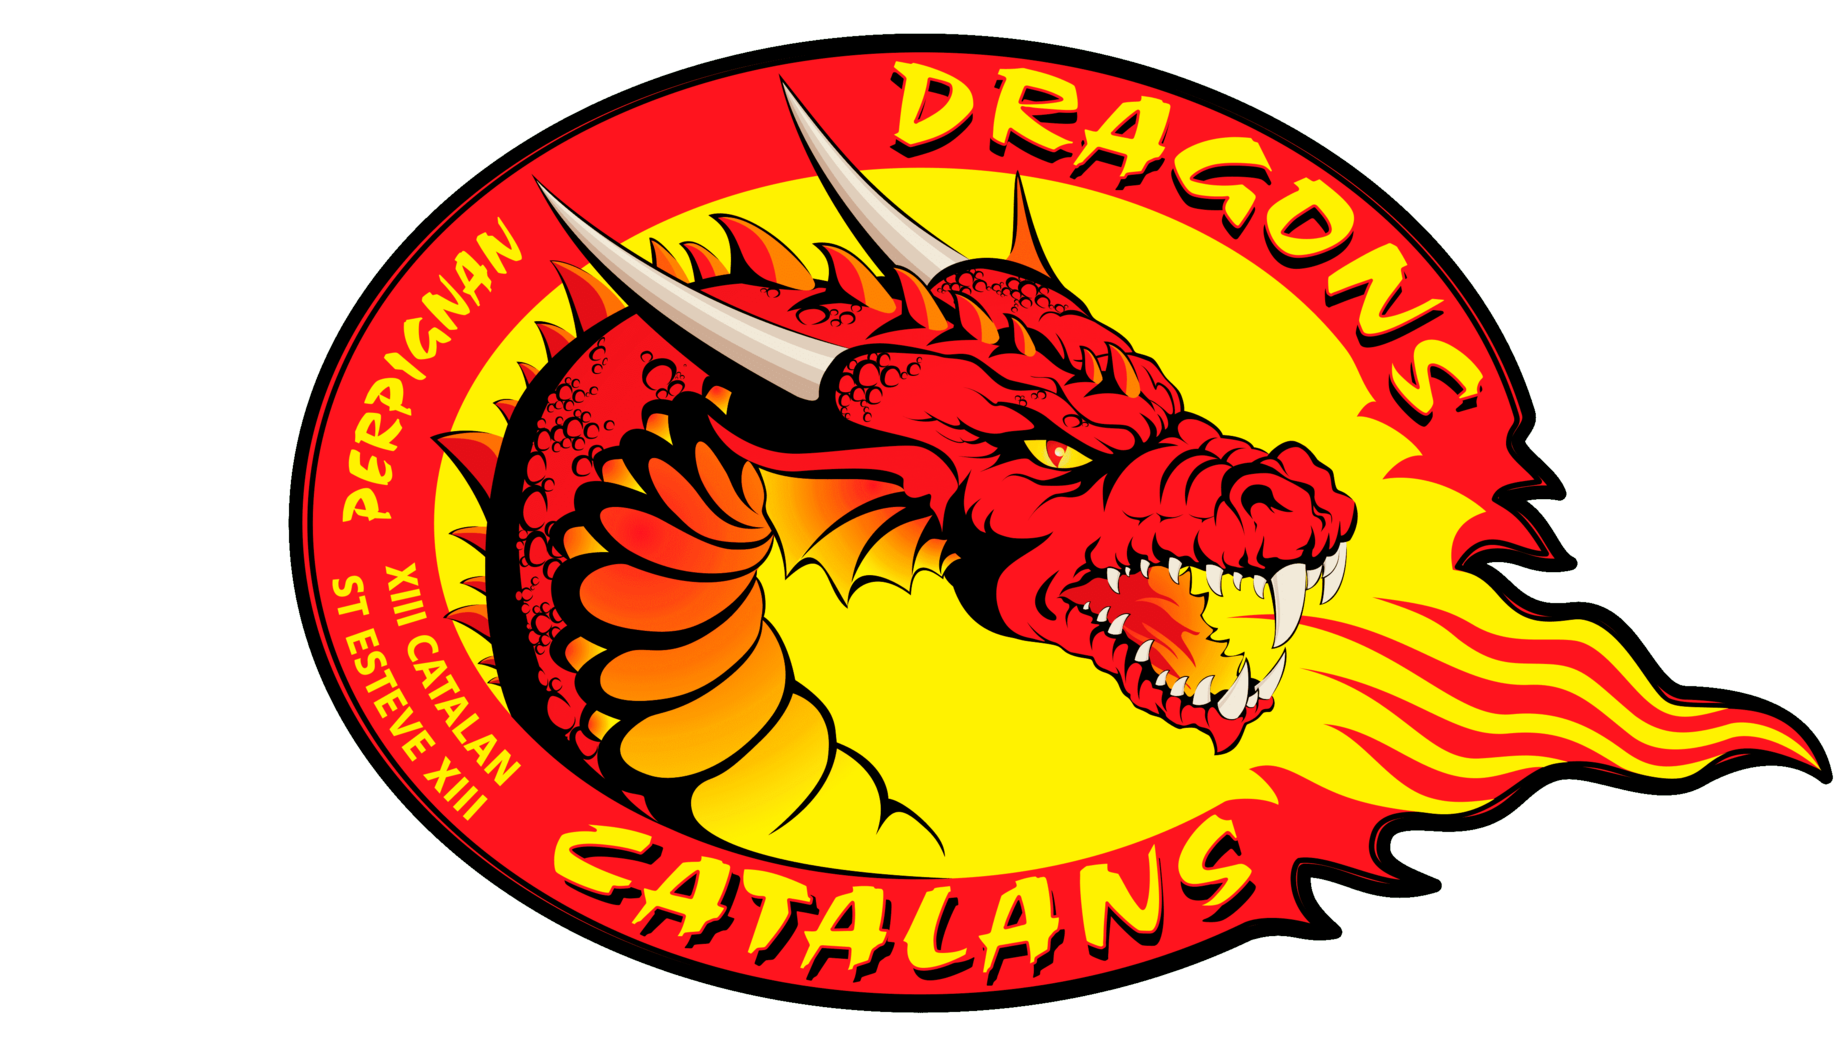 Catalans dragons logo